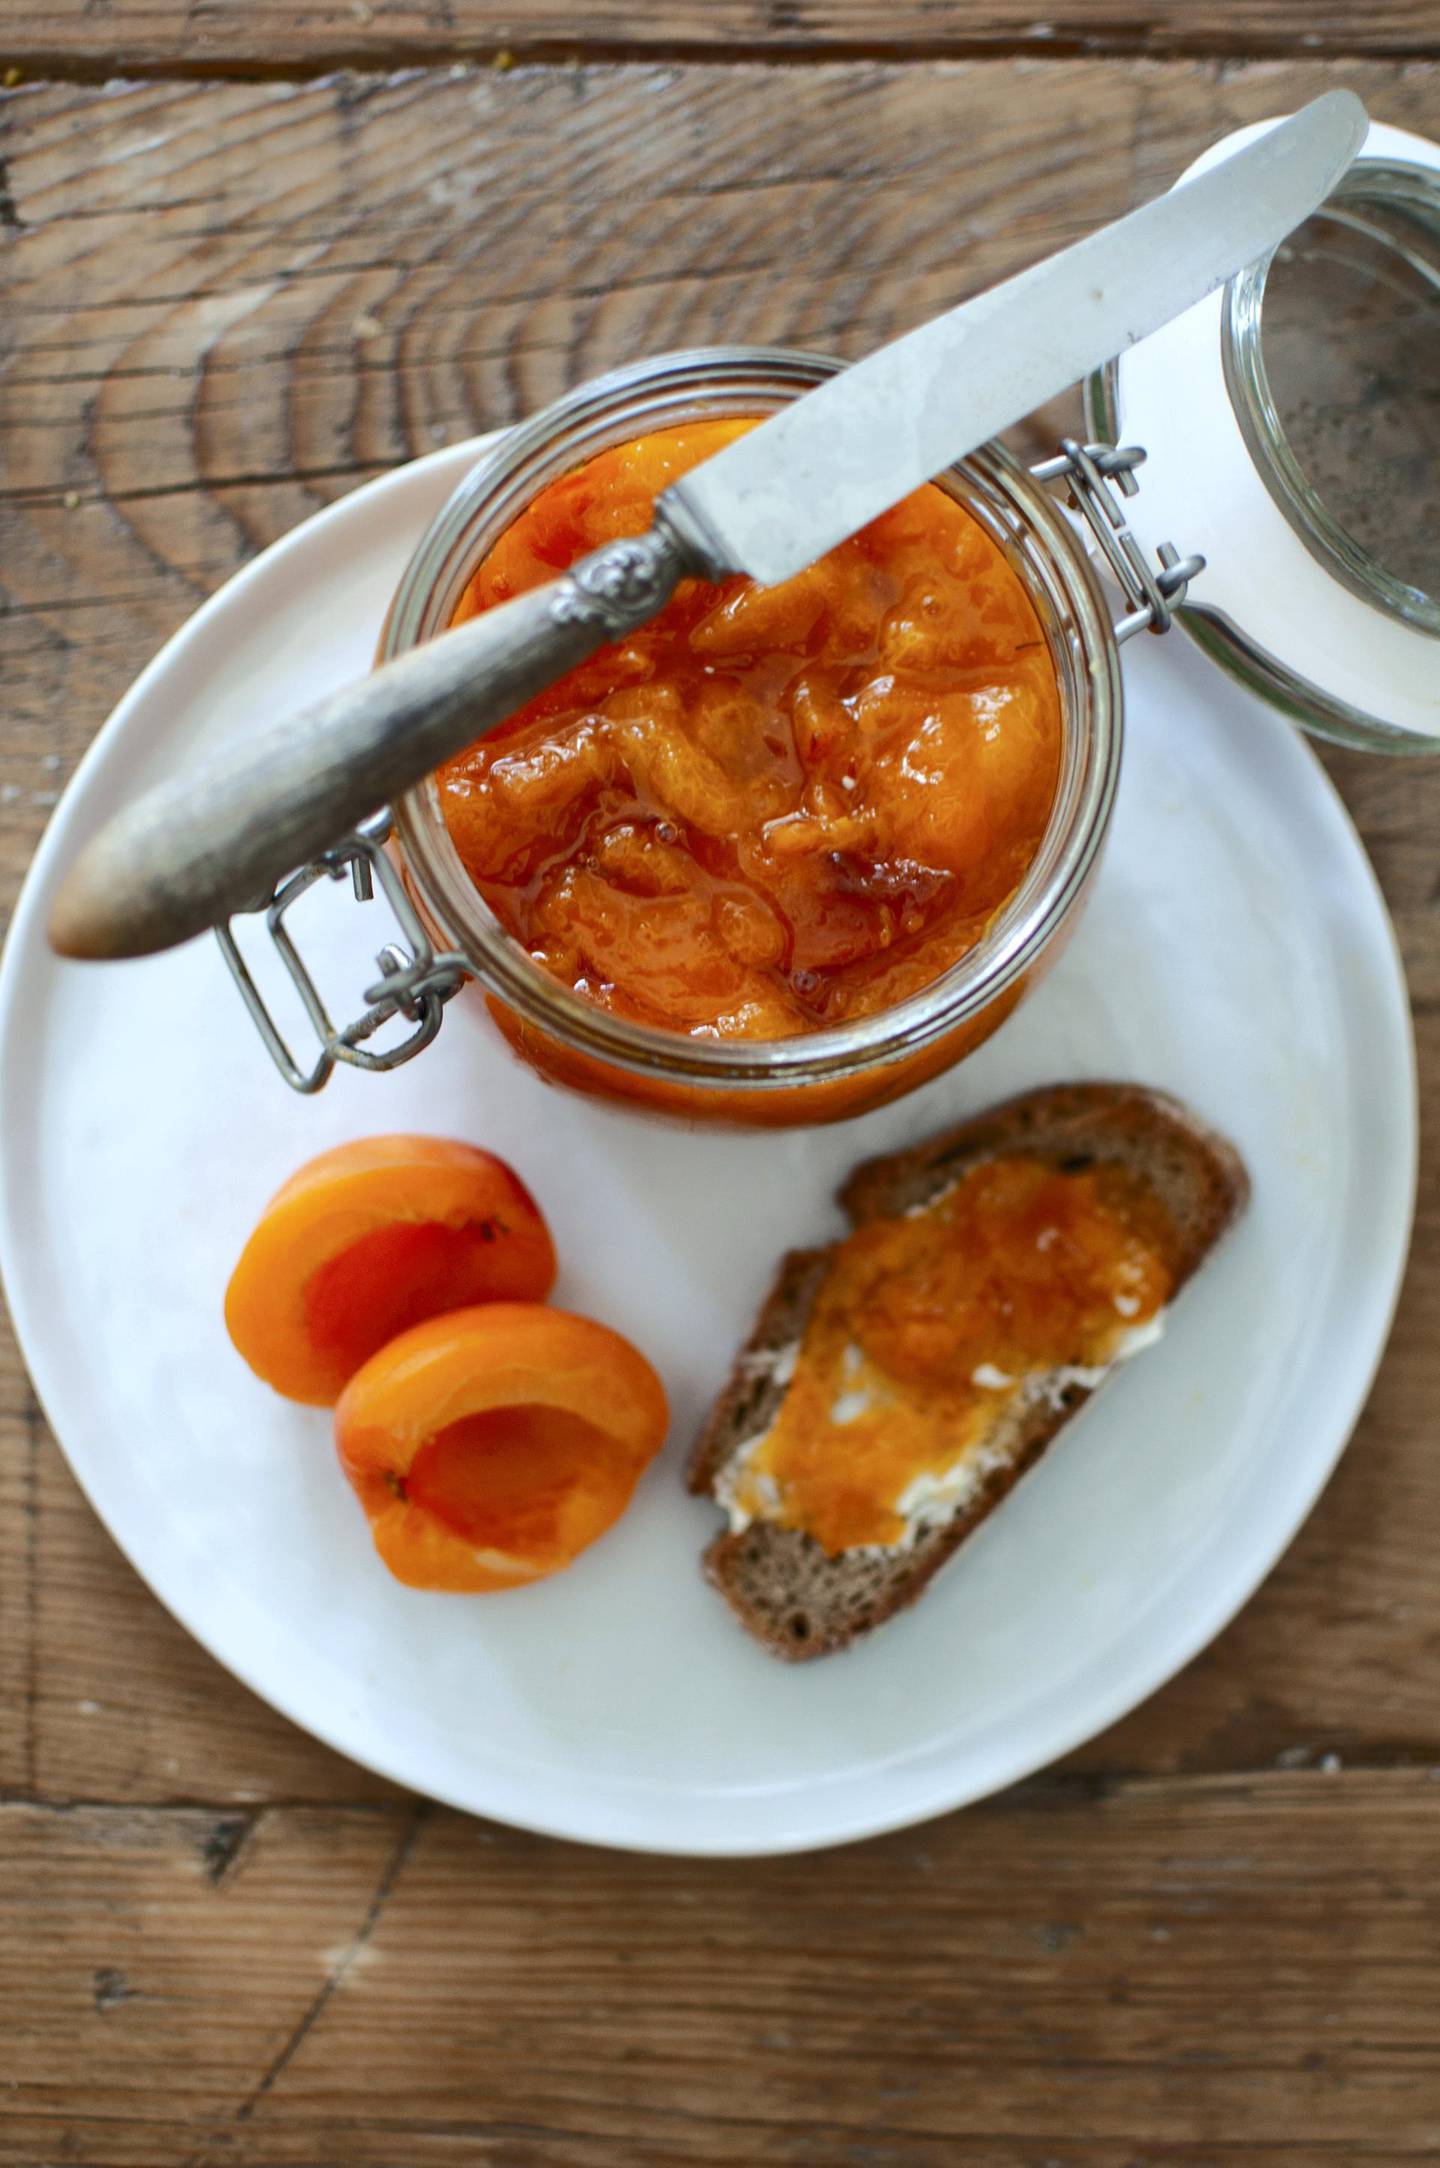 Home-made apricot jam. Scott Price